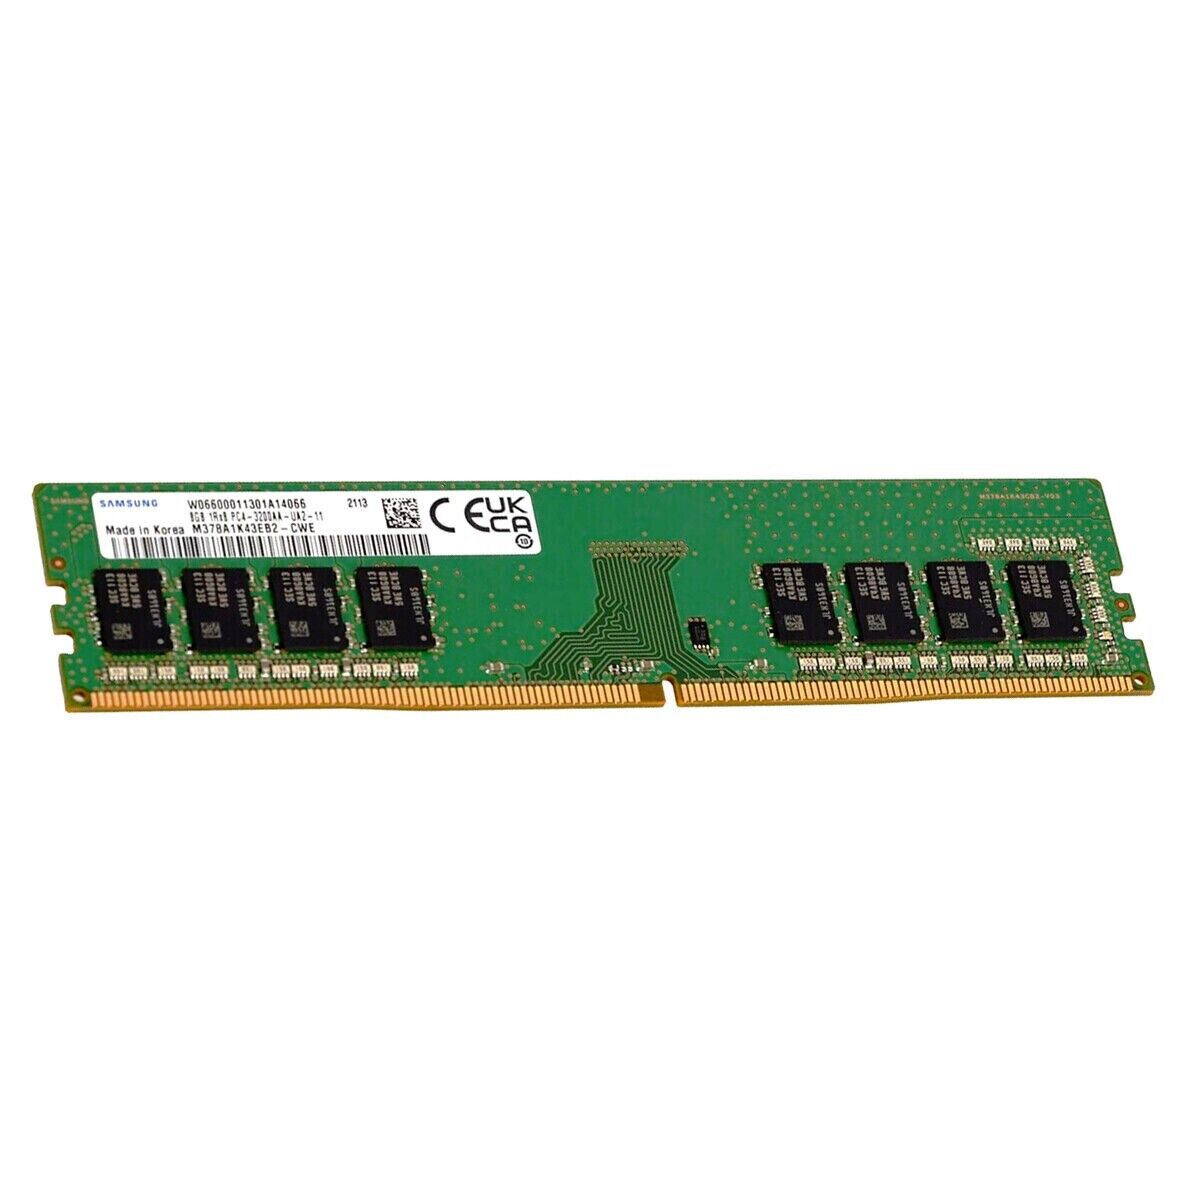 Samsung 8GB 3200MHz DDR4 UDIMM Desktop Memory RAM (M378A1K43EB2-CWE)